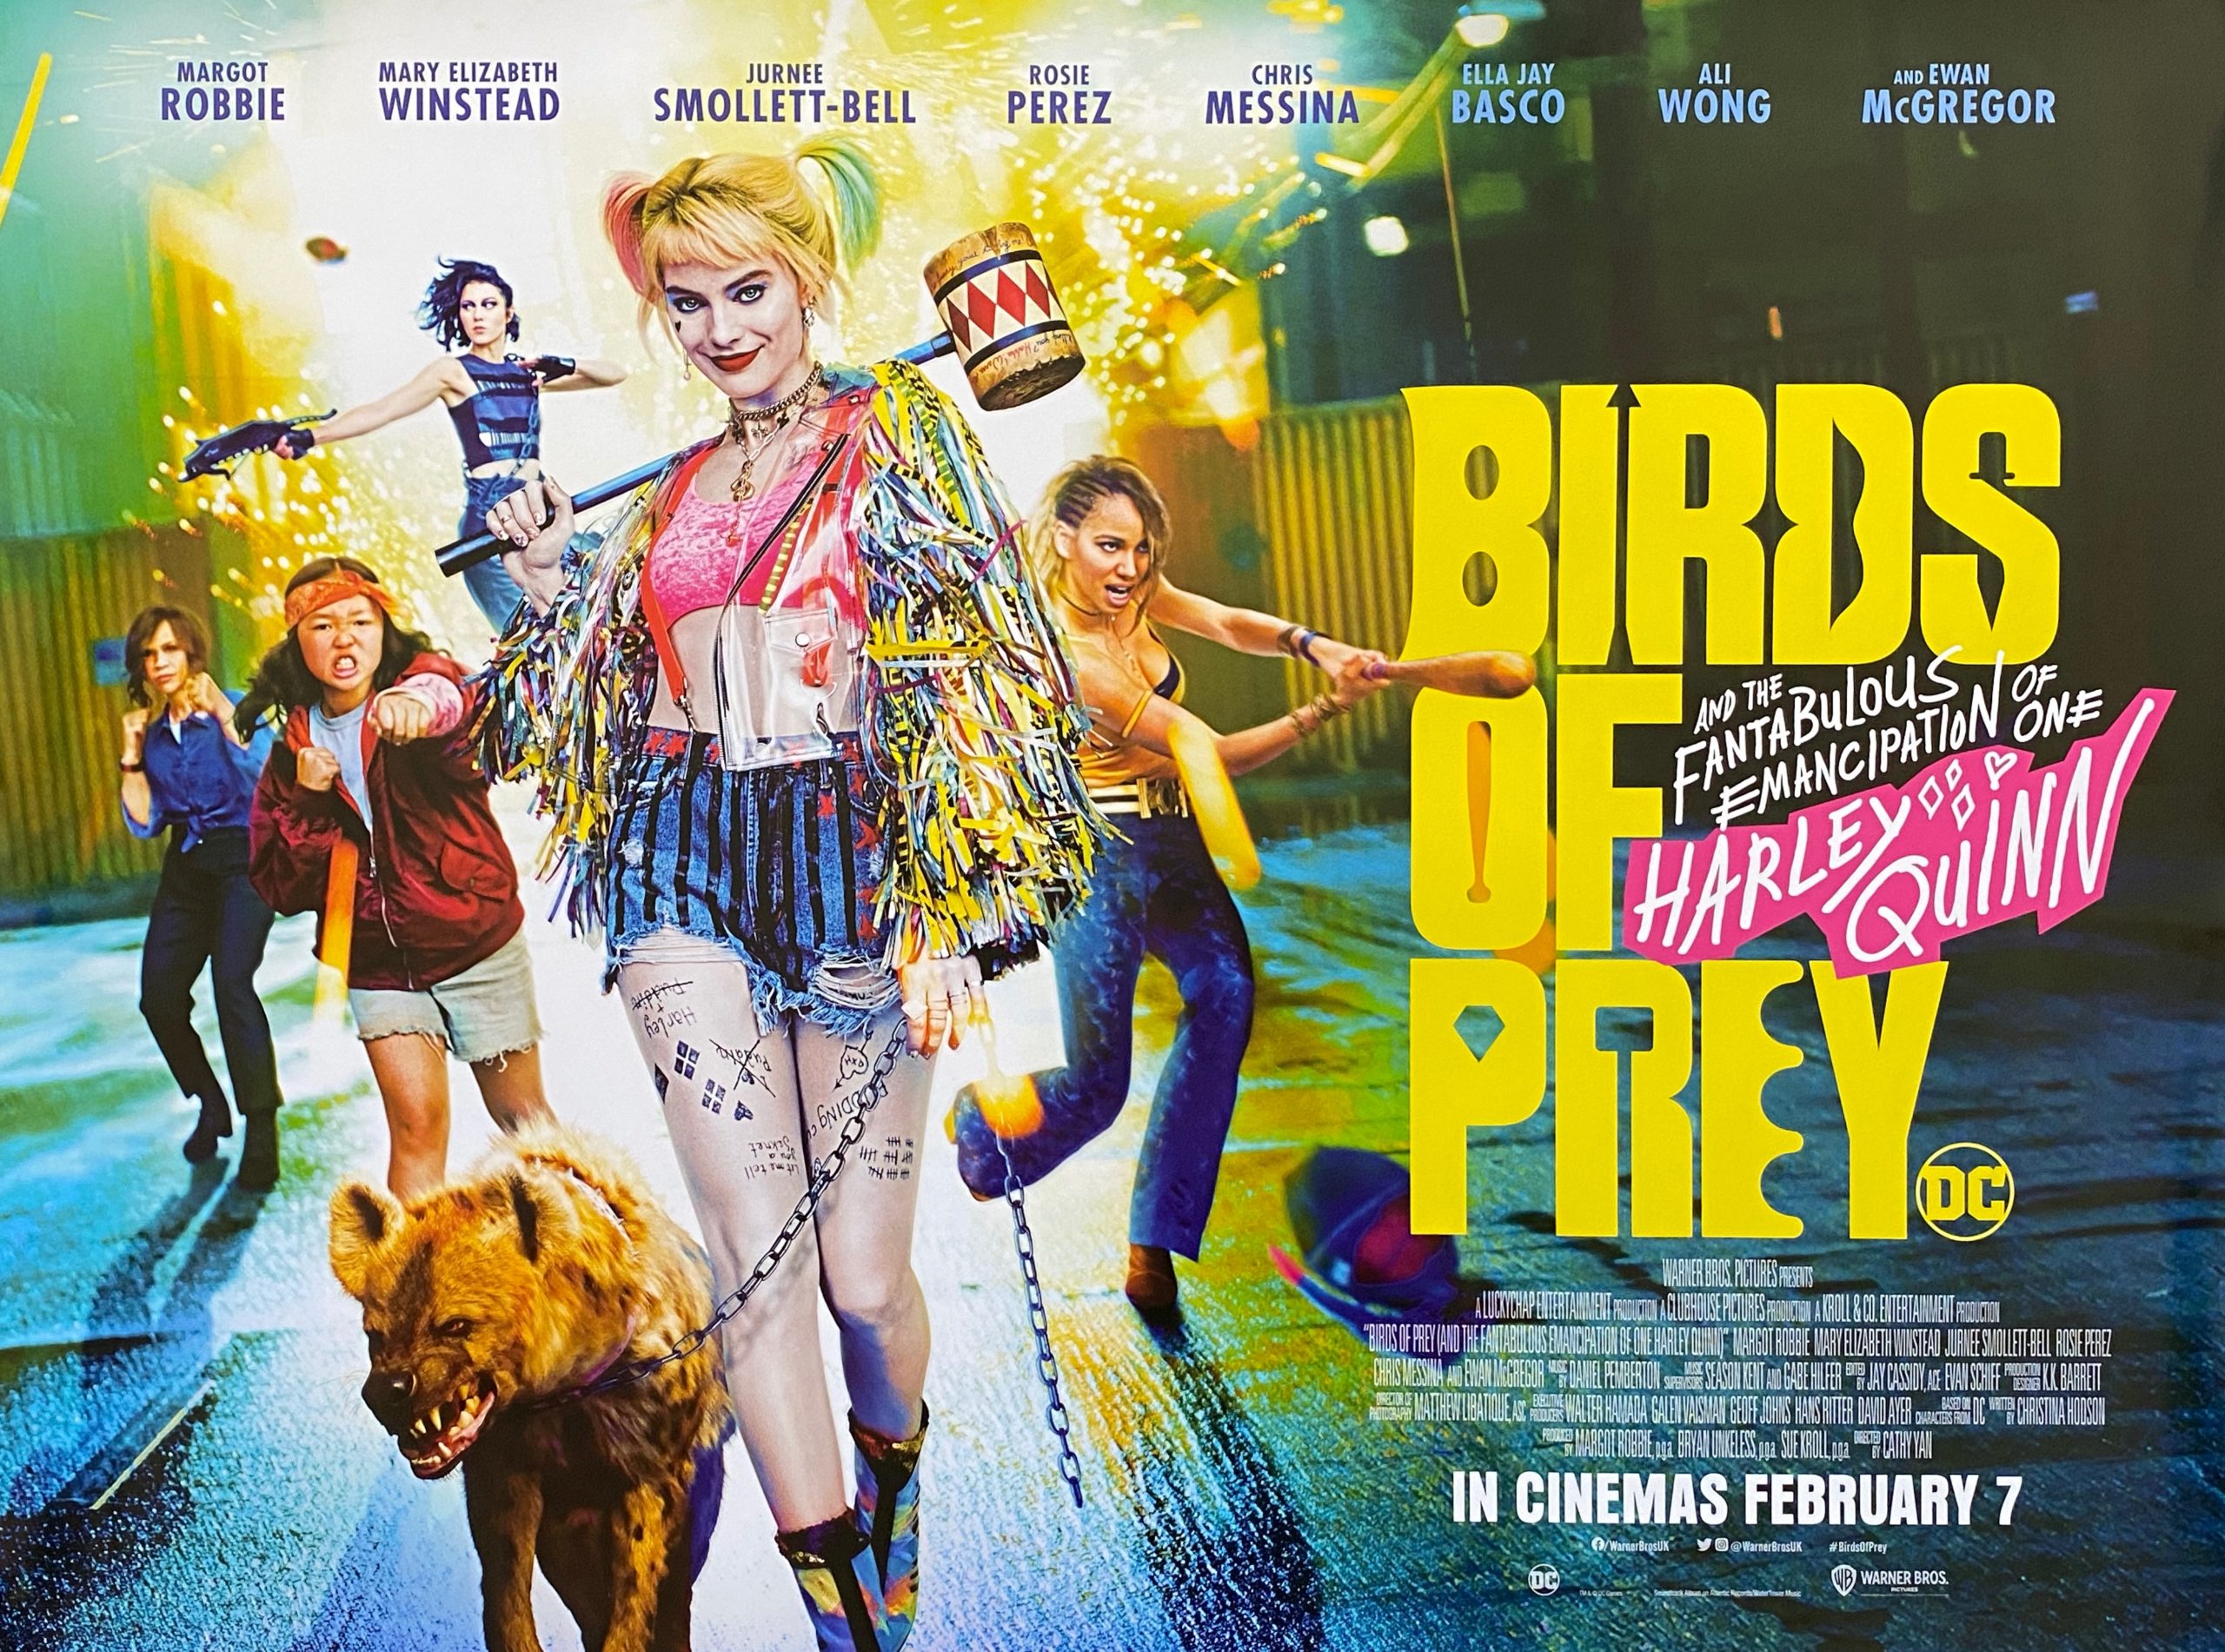 Original Birds of Prey: The Fantabulous Emancipation of One Harley Quinn